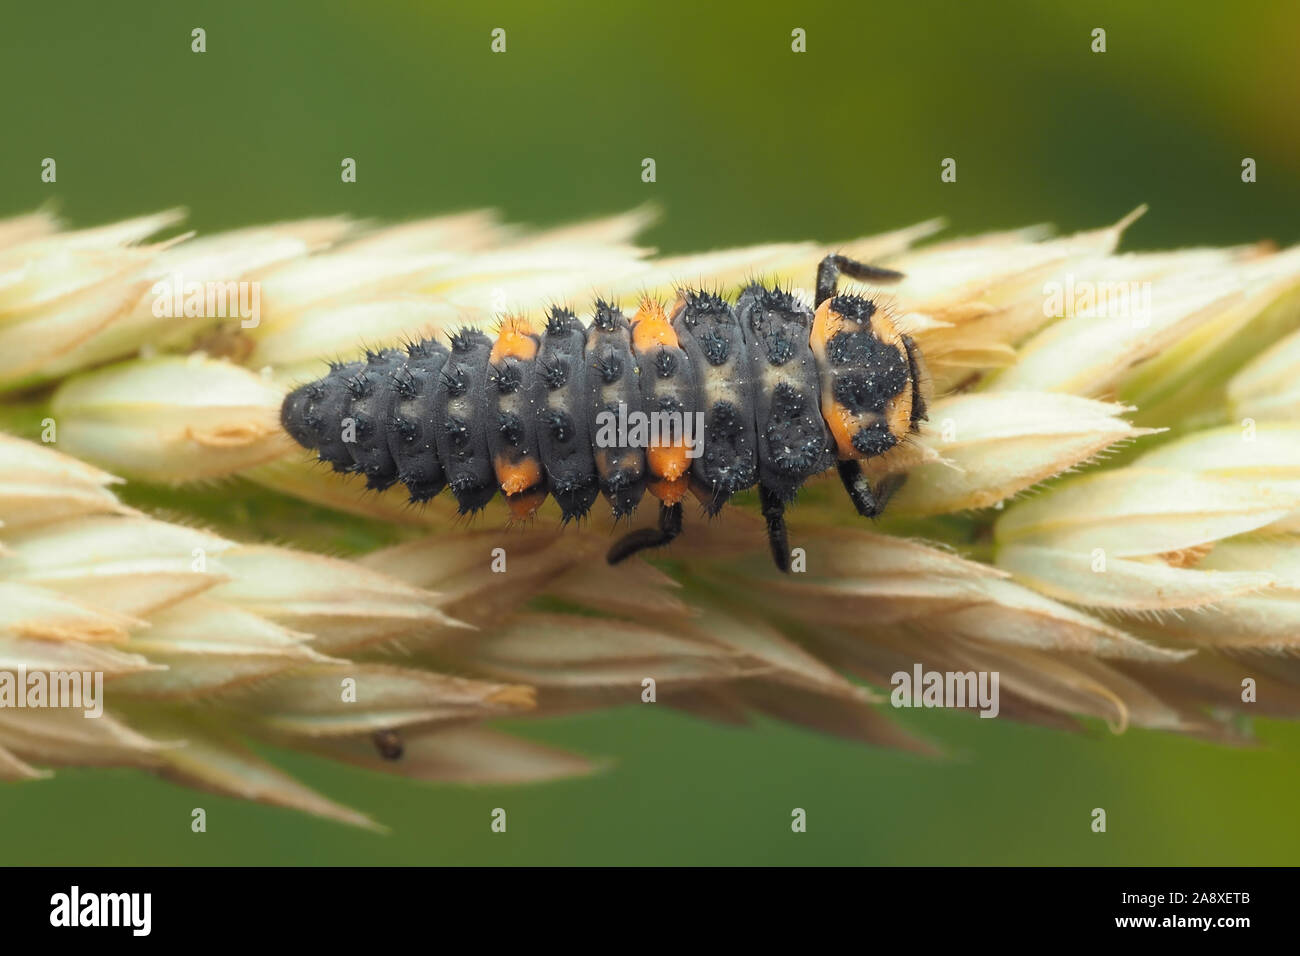 Dorsal view 7-spot Ladybird larva on grass seed head. Tipperary, Ireland Stock Photo